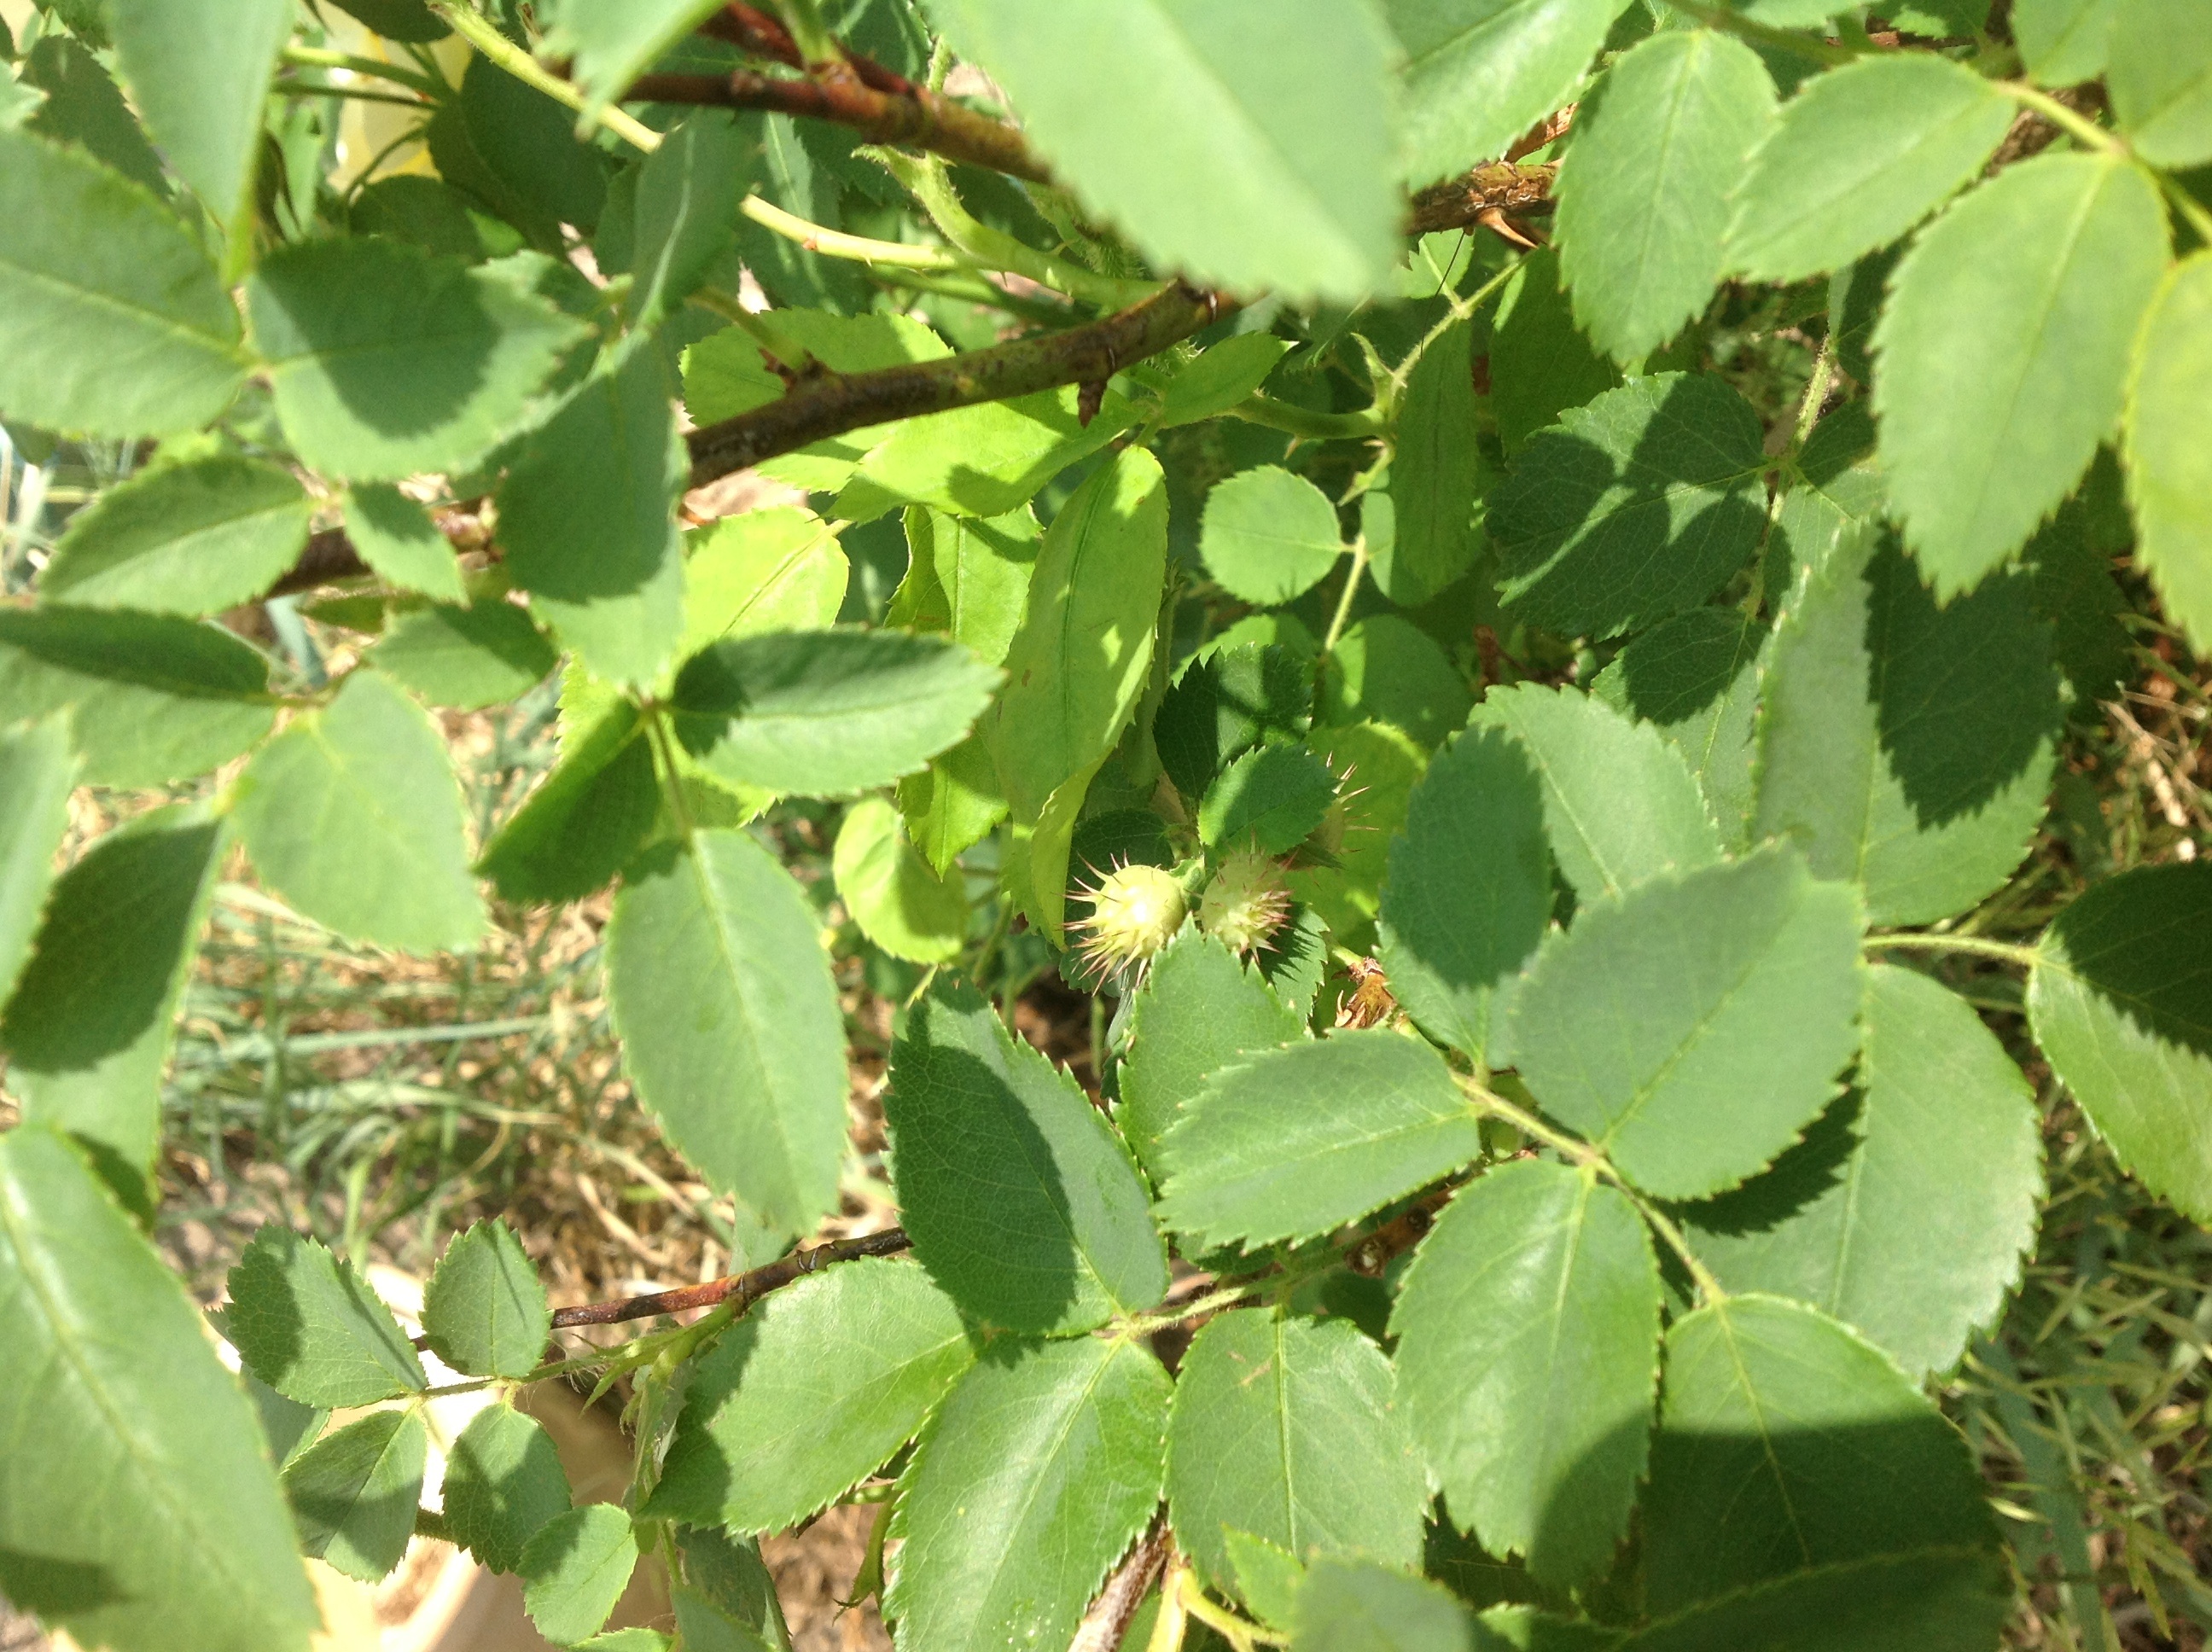 spiky green balls on rose bush, leaf and stem - Ask an Expert